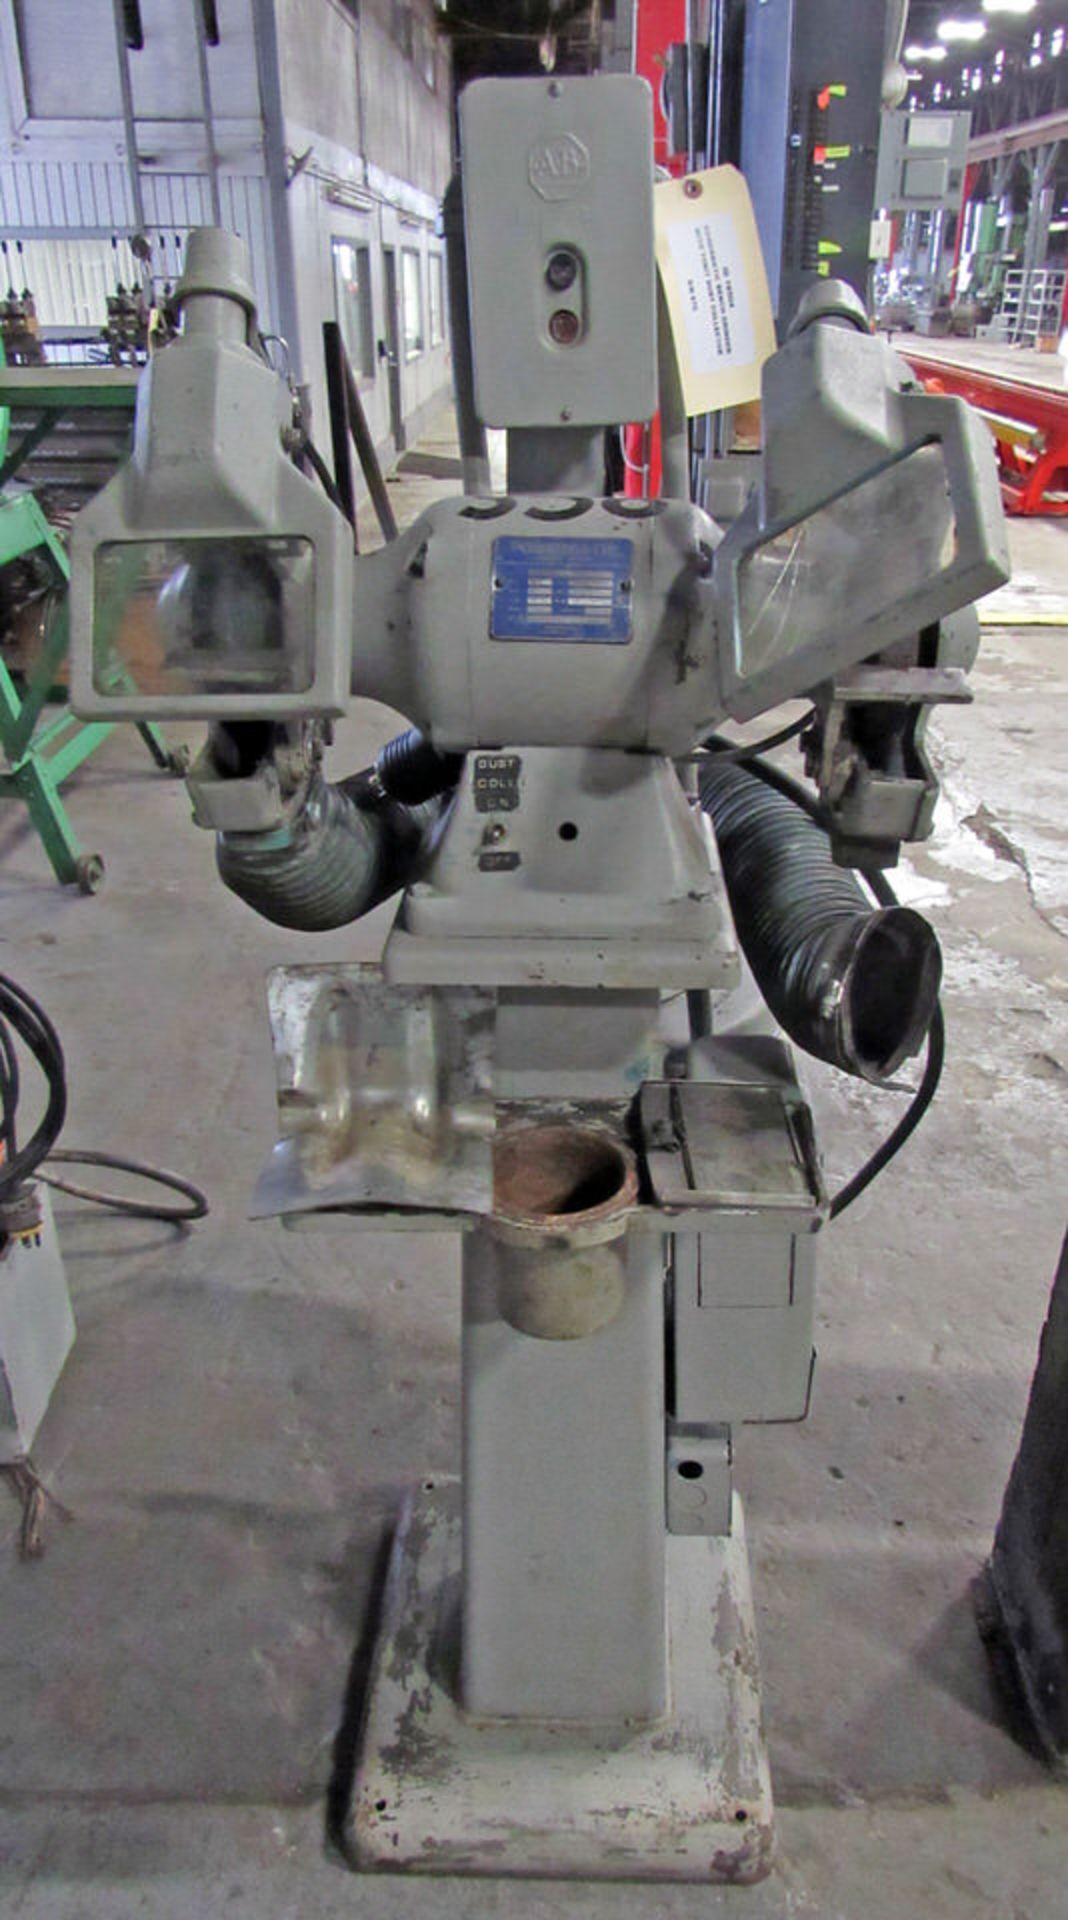 Powermatic Model 66 Bench Grinder with Torit Dust Collector, 3/4 hp motor, 5" dia. grinding wheel (